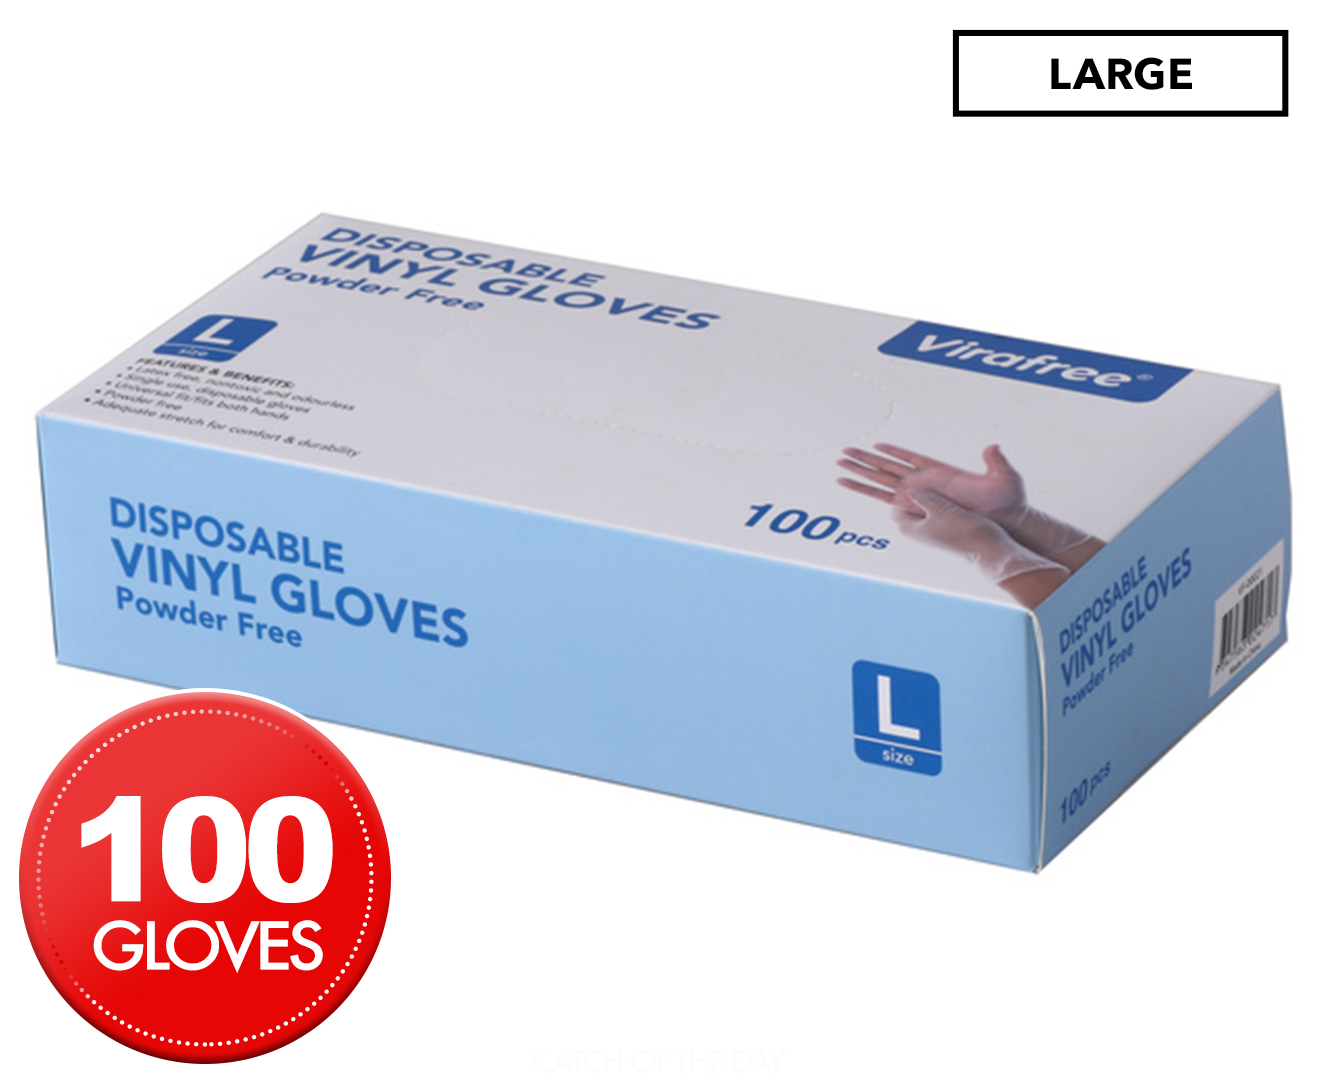 Large Disposable Powder Free Vinyl Gloves 100pk | Catch.co.nz